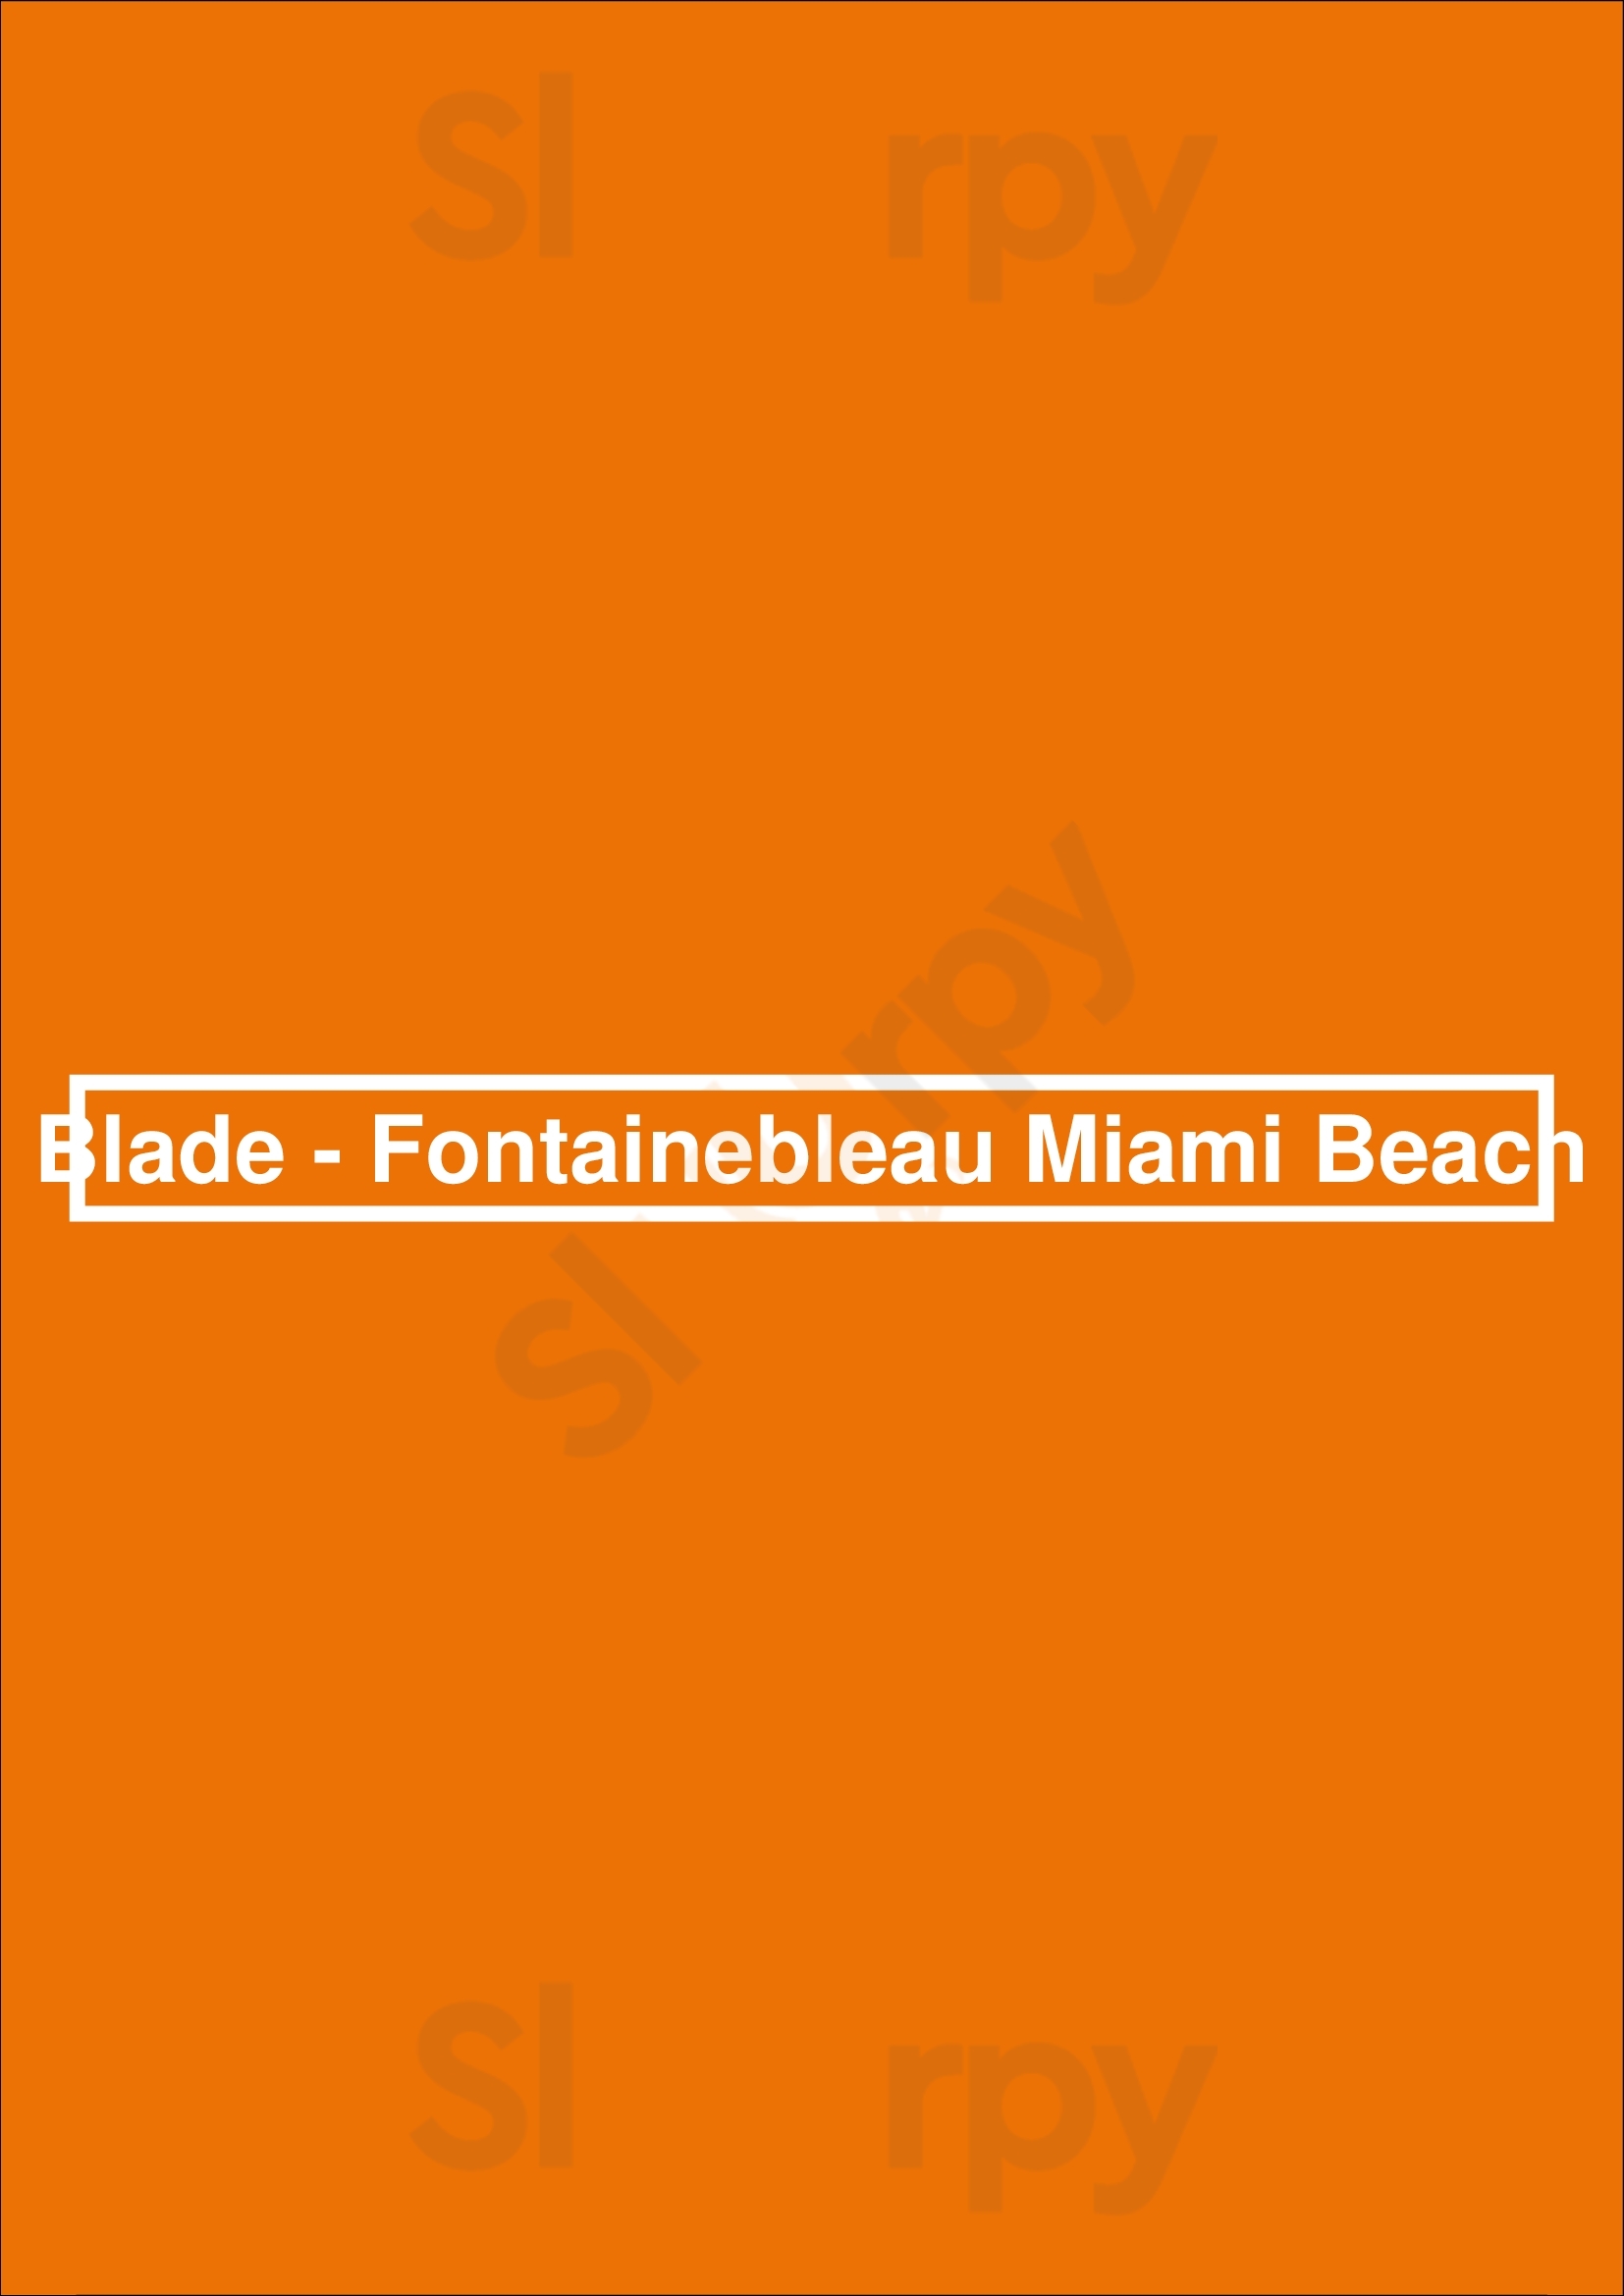 Blade - Fontainebleau Miami Beach Miami Beach Menu - 1